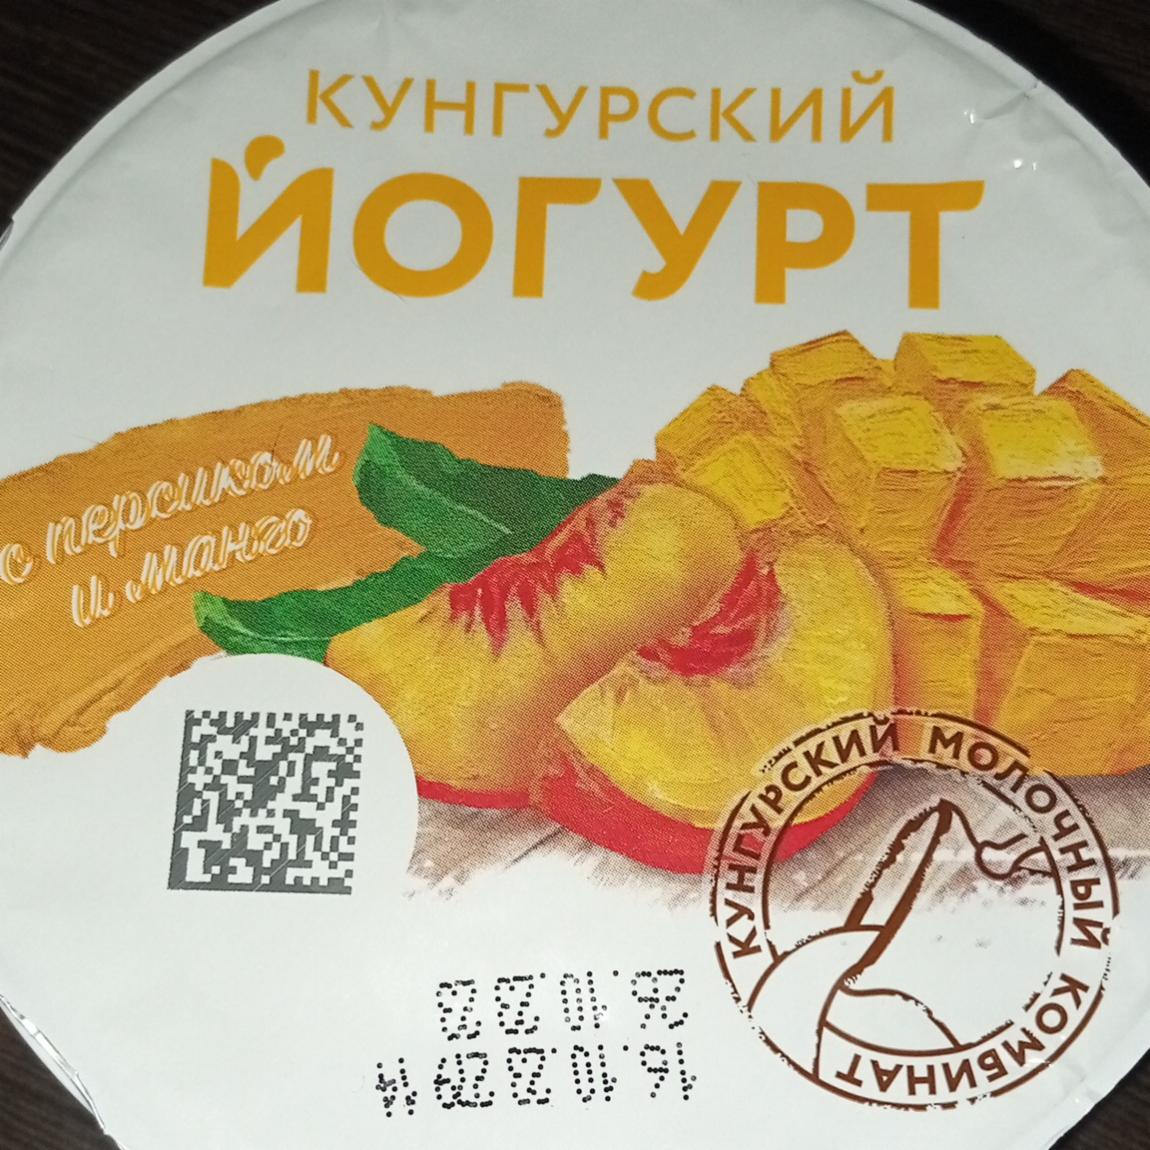 Фото - йогурт с персиком и манго Кунгурский